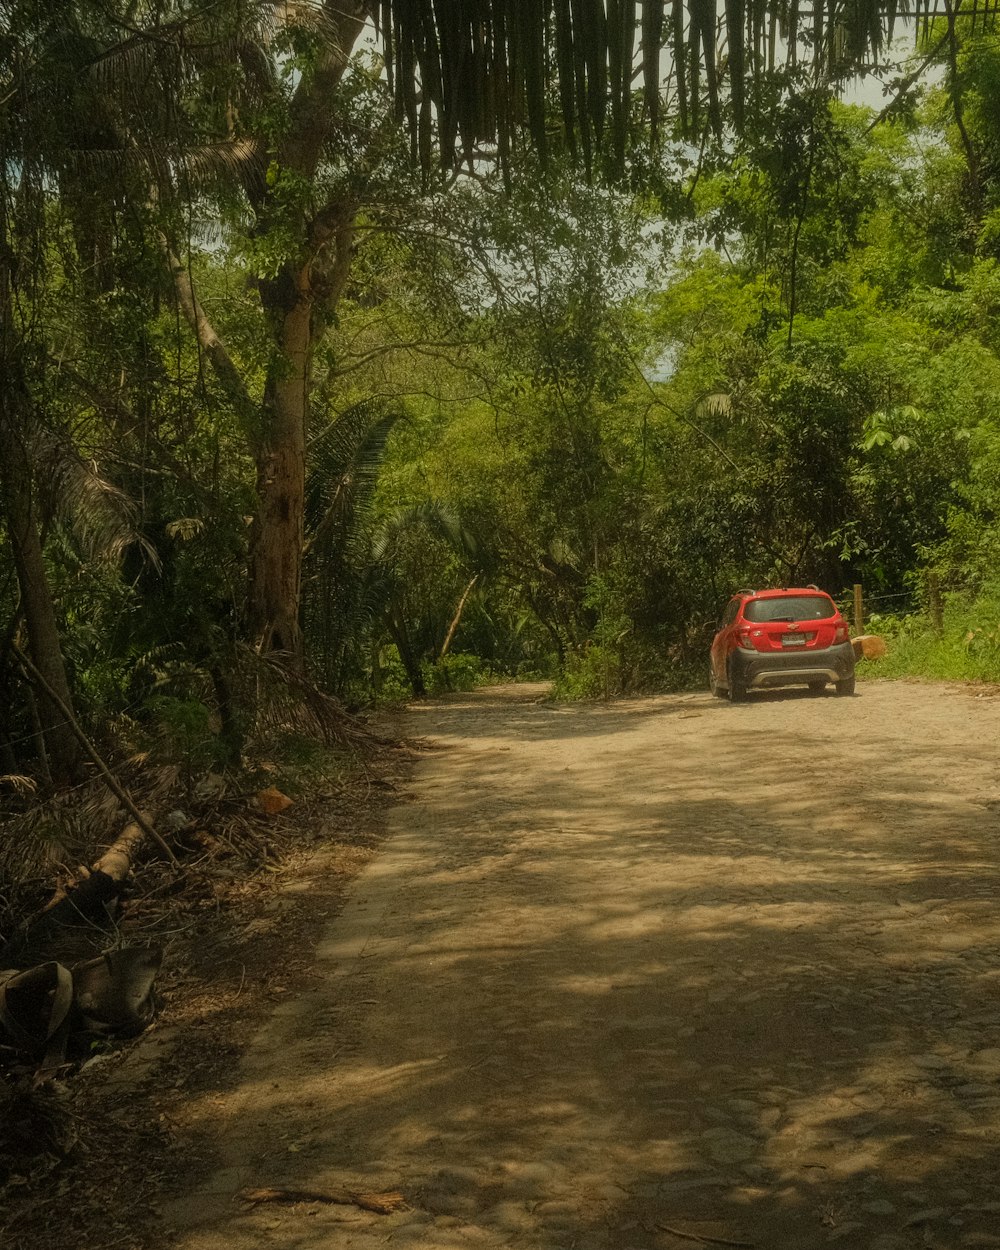 a red car driving down a dirt road